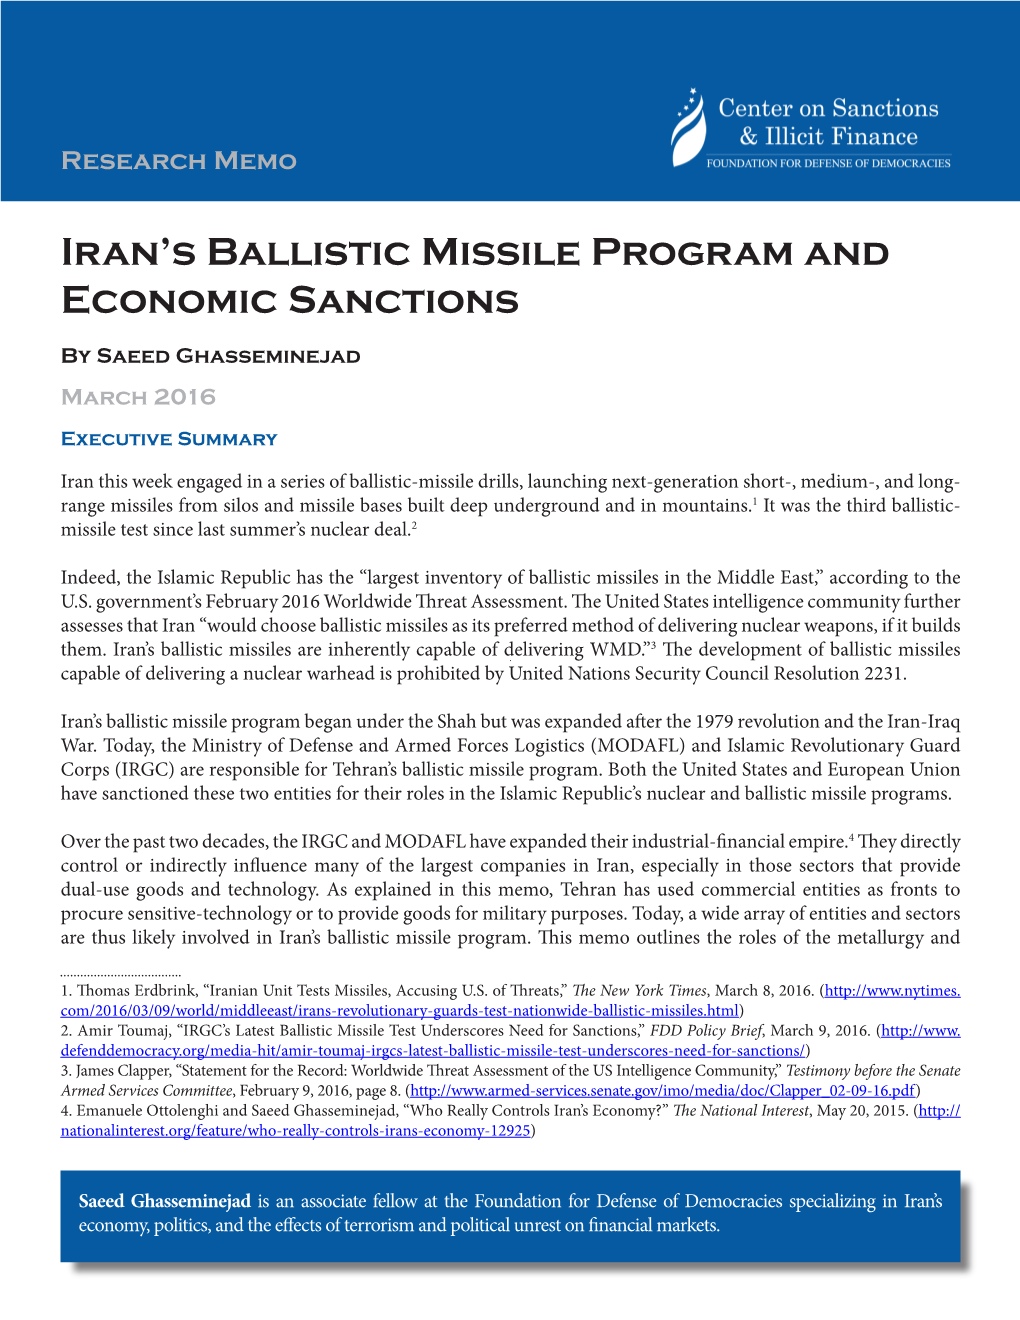 Iran's Ballistic Missile Program and Economic Sanctions